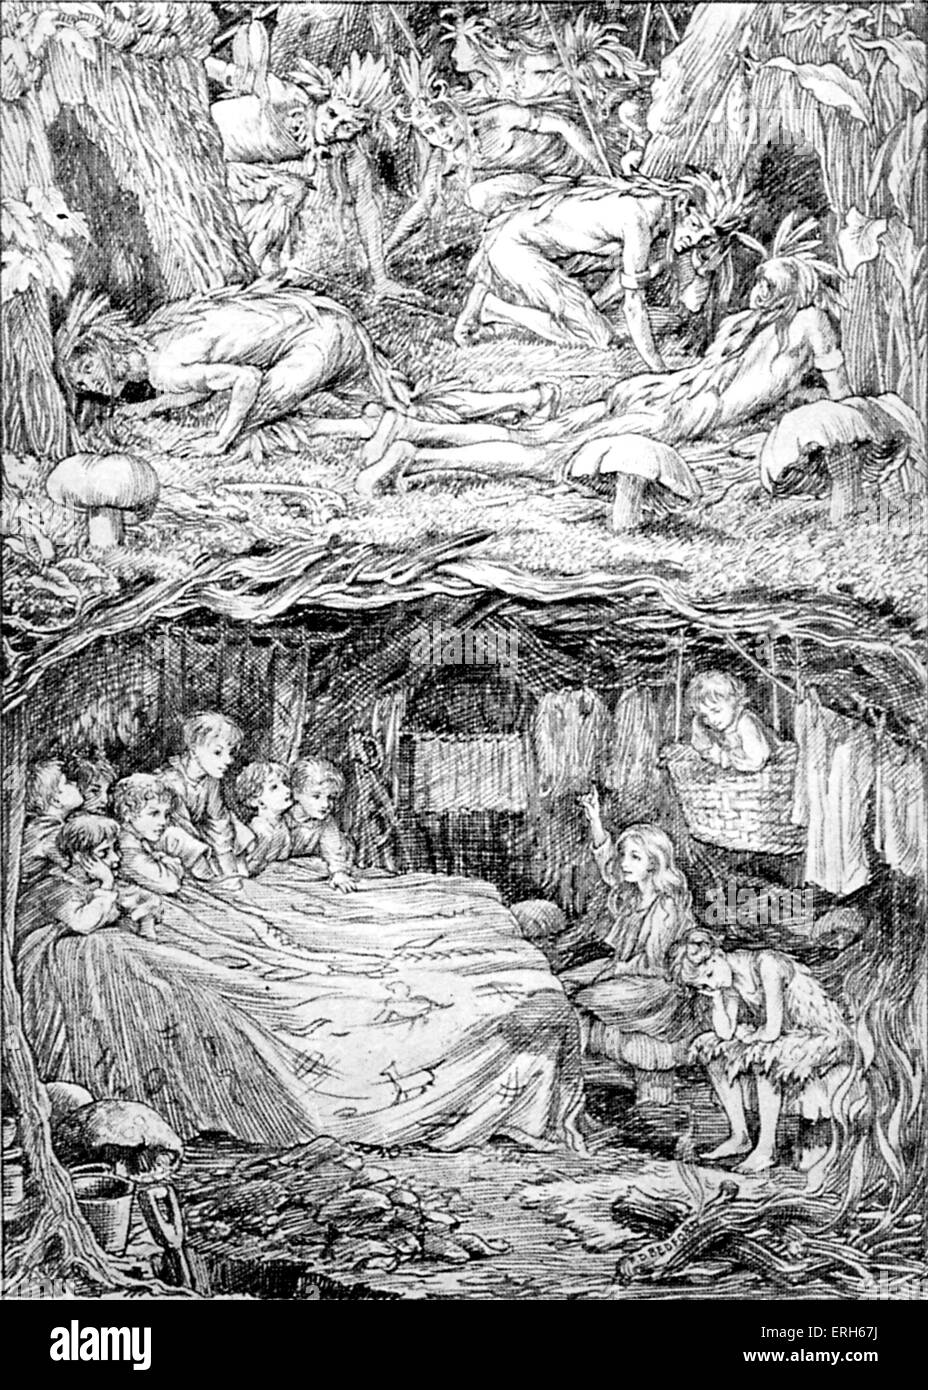 J.M. Barrie Peter Pan - 'Peter e Wendy'. Illustrazione di F.D. Bedford, 1920s. La JMB: (James Matthew Barrie) romanziere scozzese Foto Stock